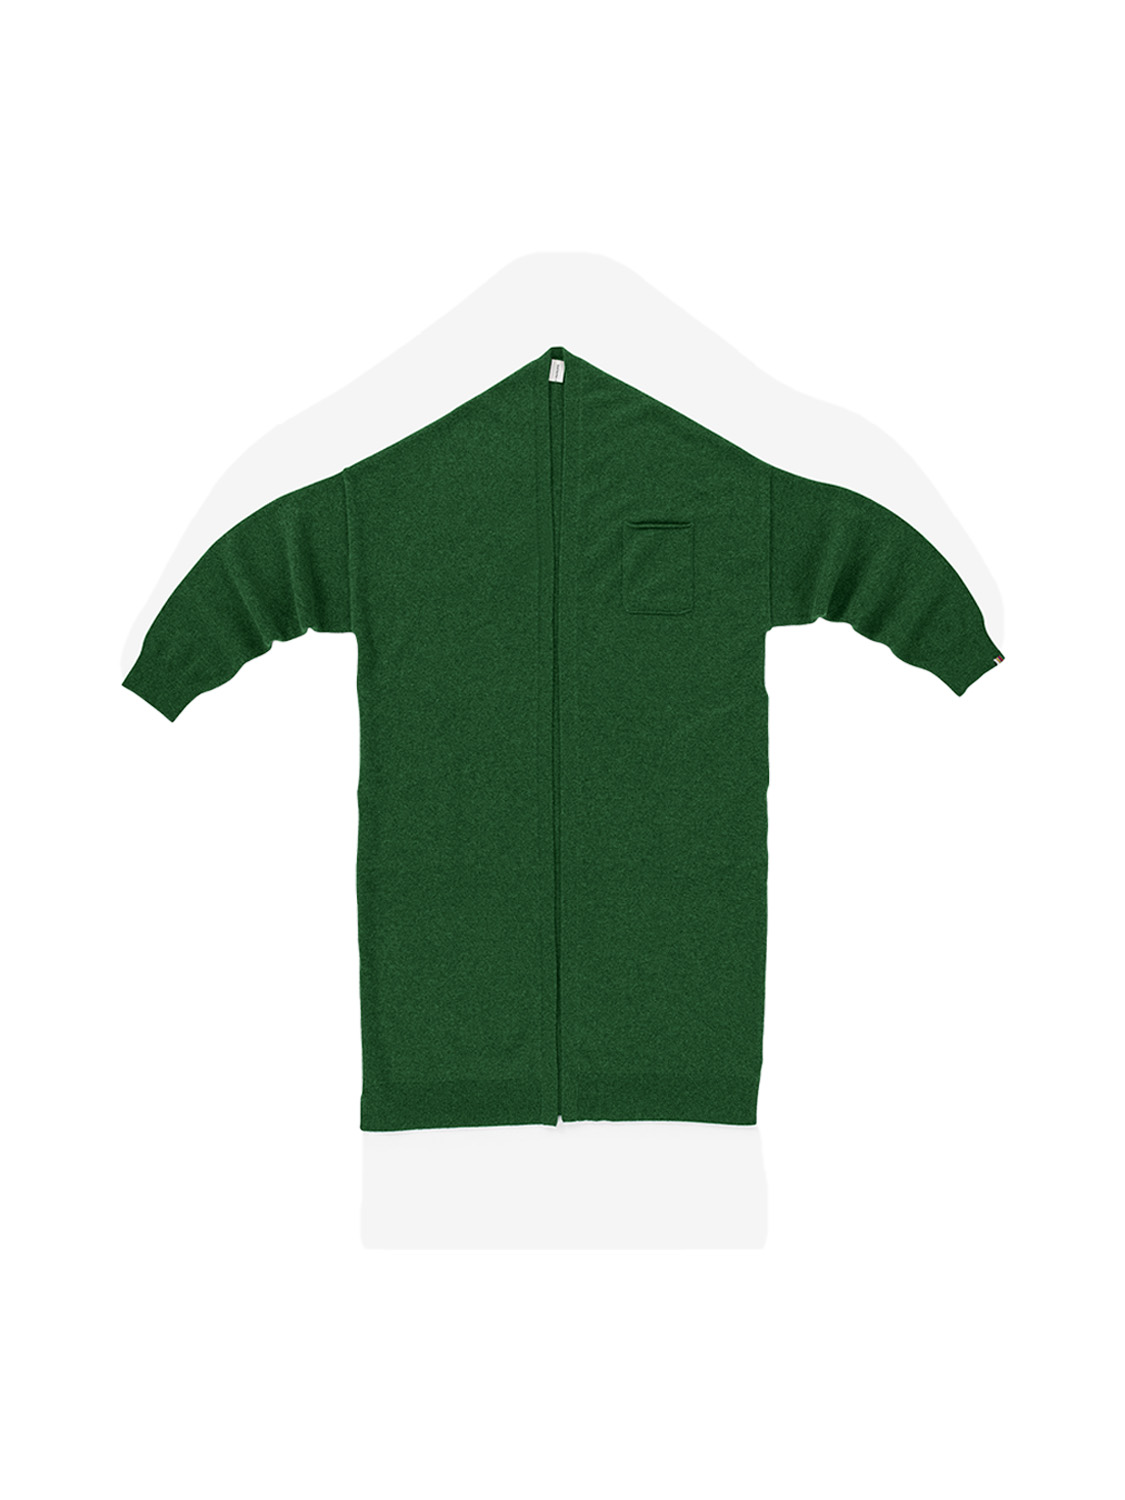 Extreme Cashmere N°61 Koto - Rebeca larga de cachemira  verde Talla única